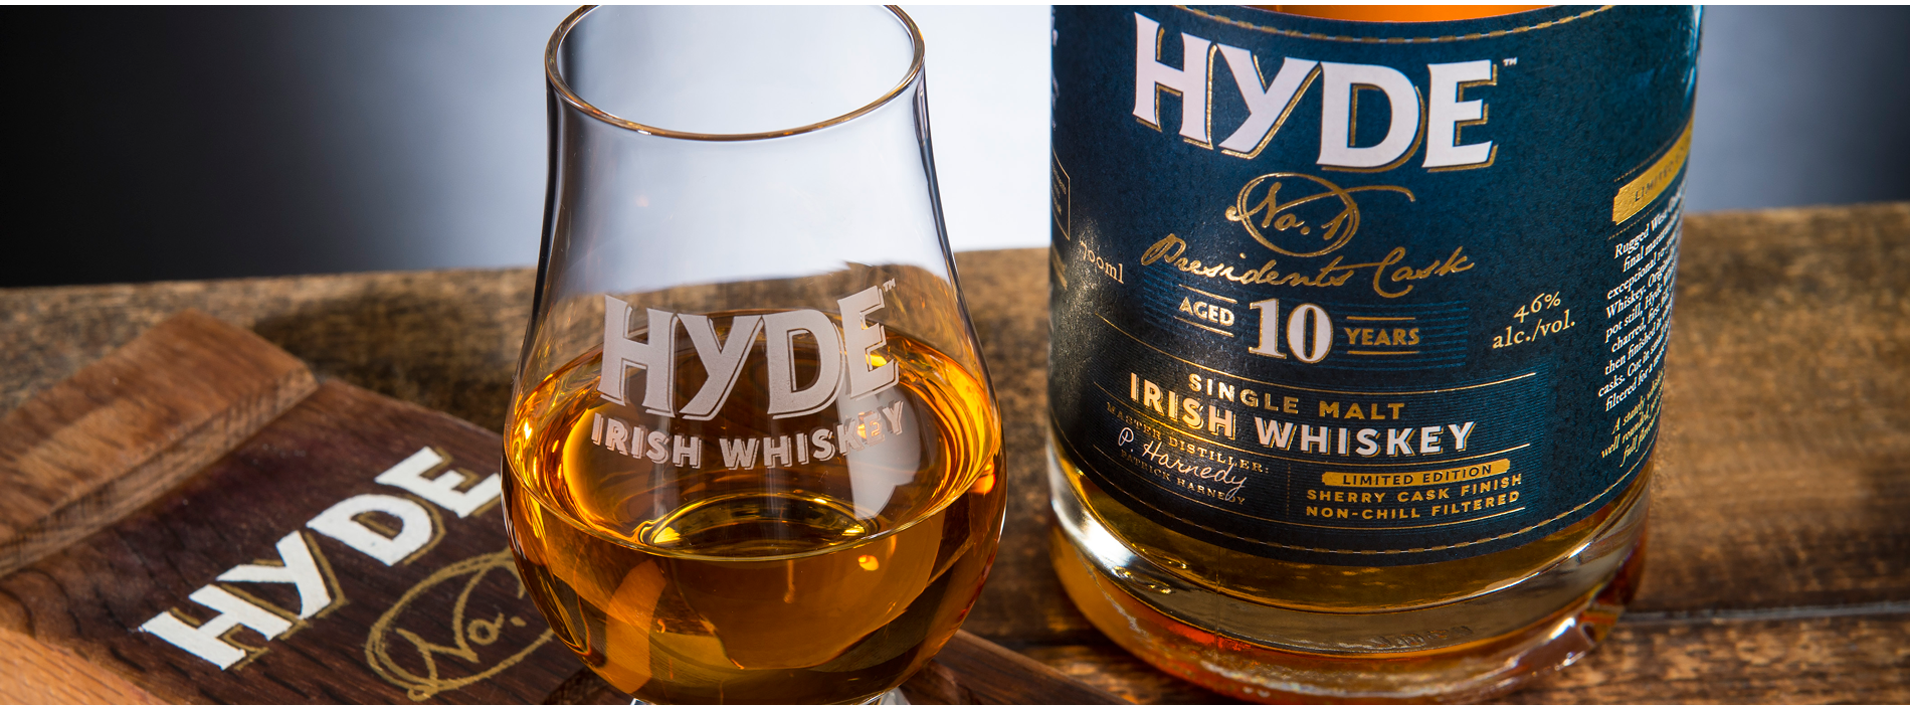 Hyde Whiskey Ireland | Fairley's Wines (UK)